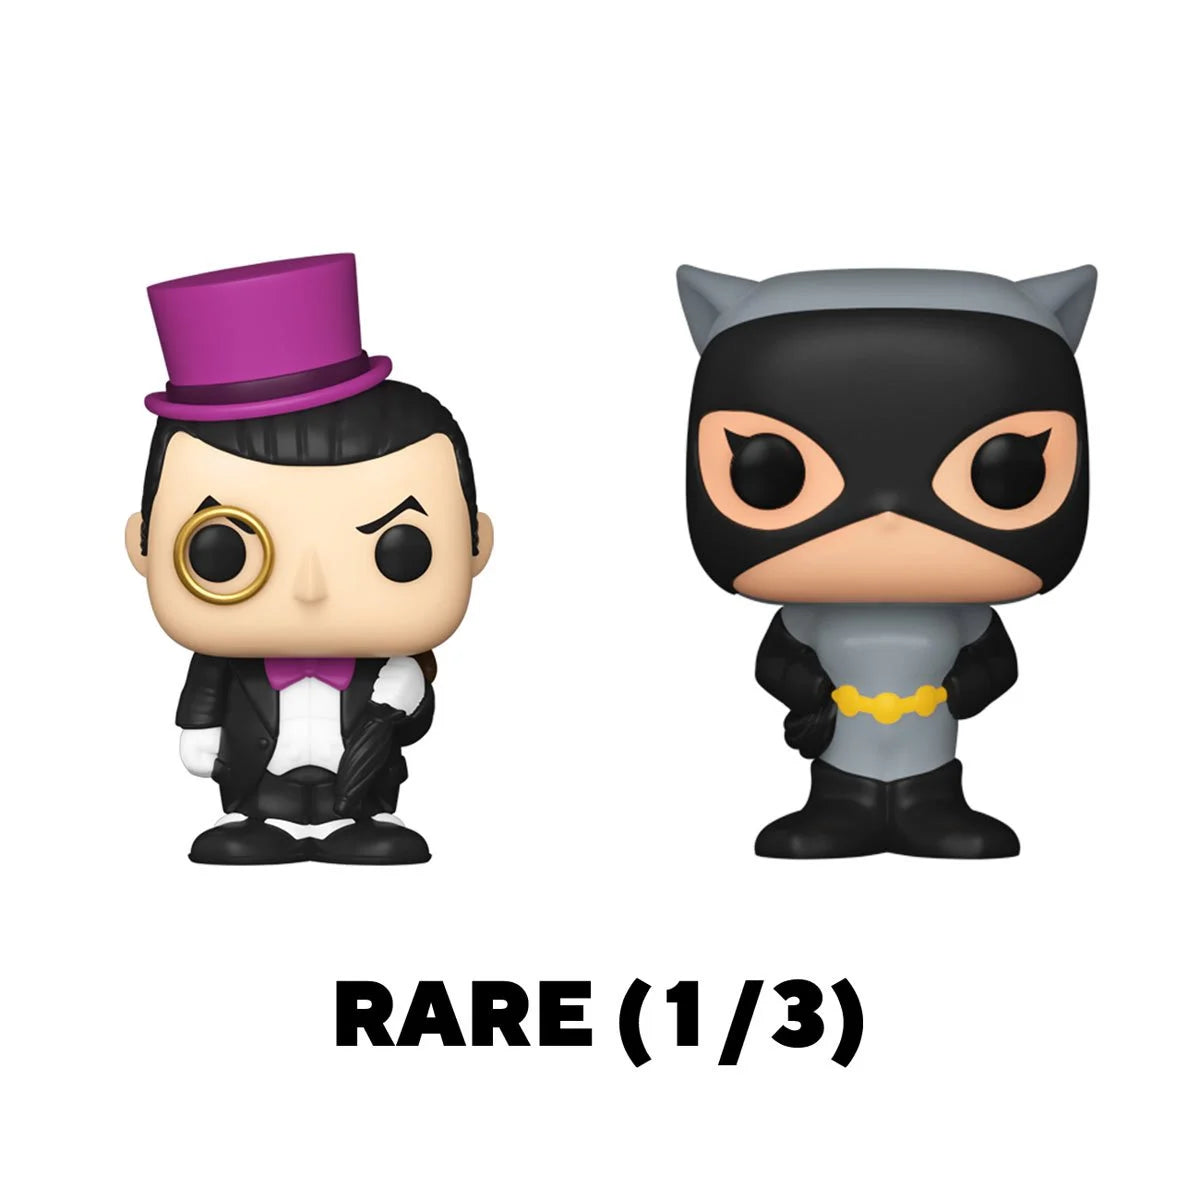 Batman Bitty Pop! Mini-Figure 4-Pack rare chase - Heretoserveyou